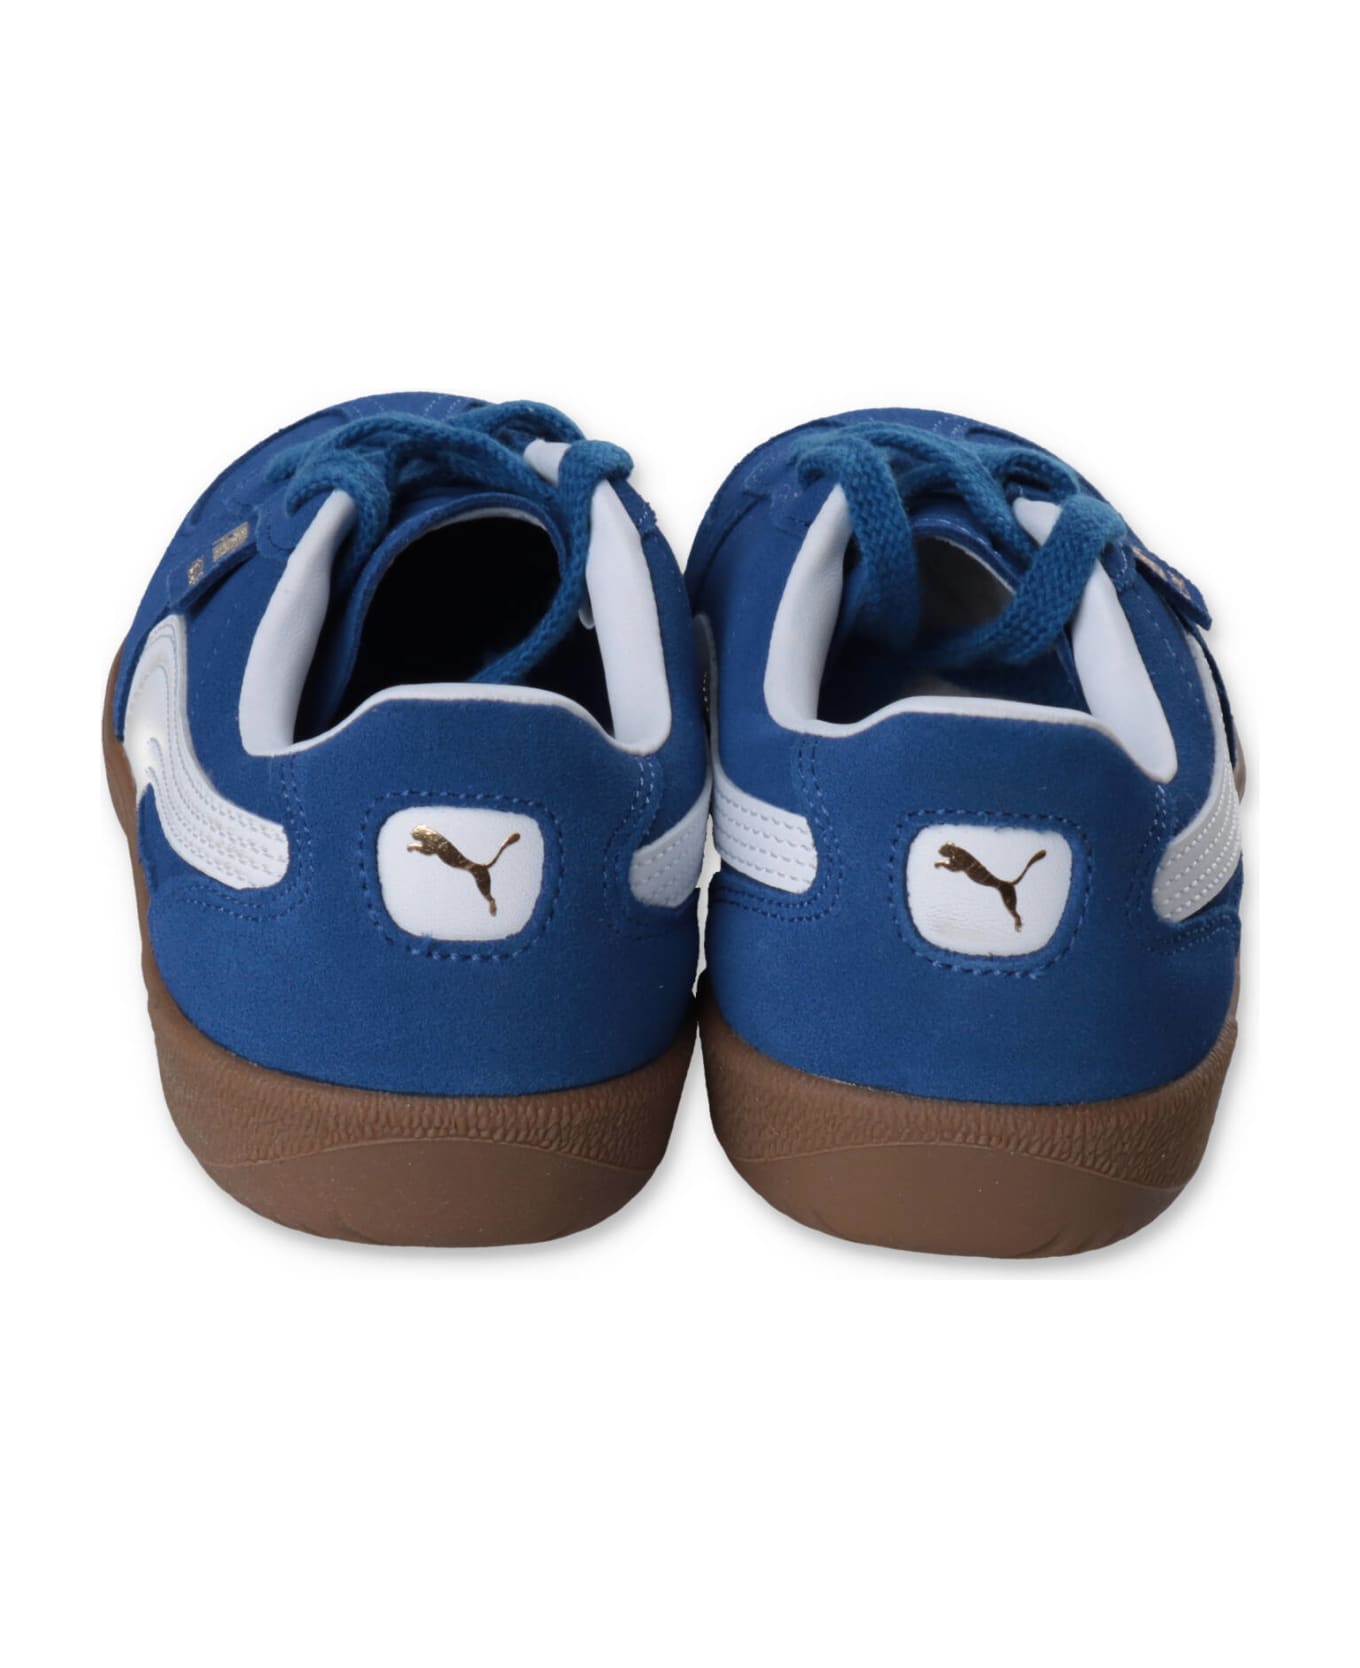 Puma Sneakers Blu Royal In Pelle Scamosciata Bambino - Blu シューズ